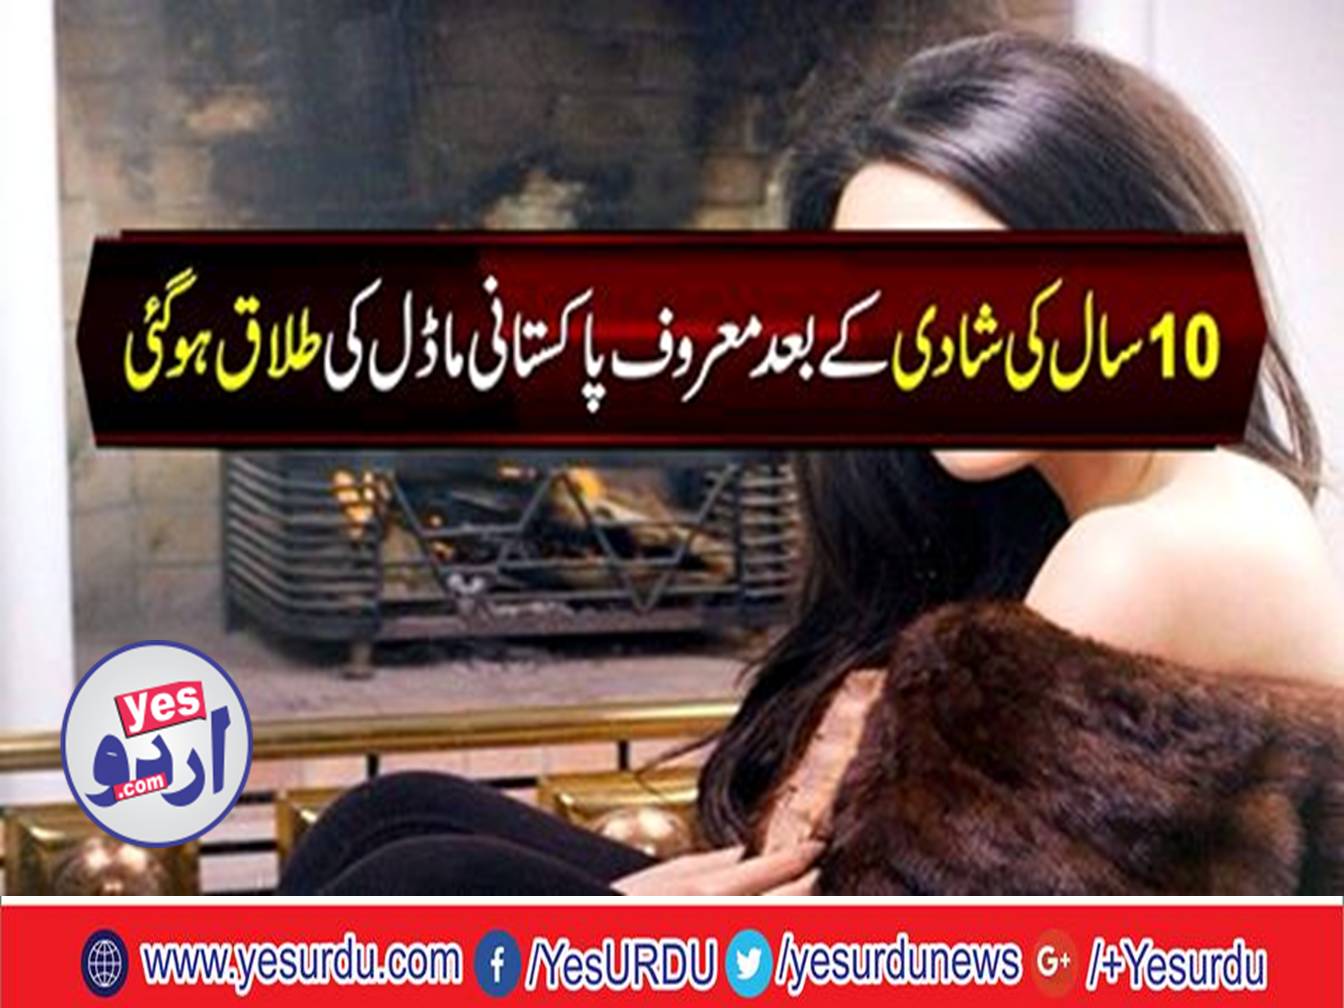 Pakistani model Aisha Linnea Akthar divorced